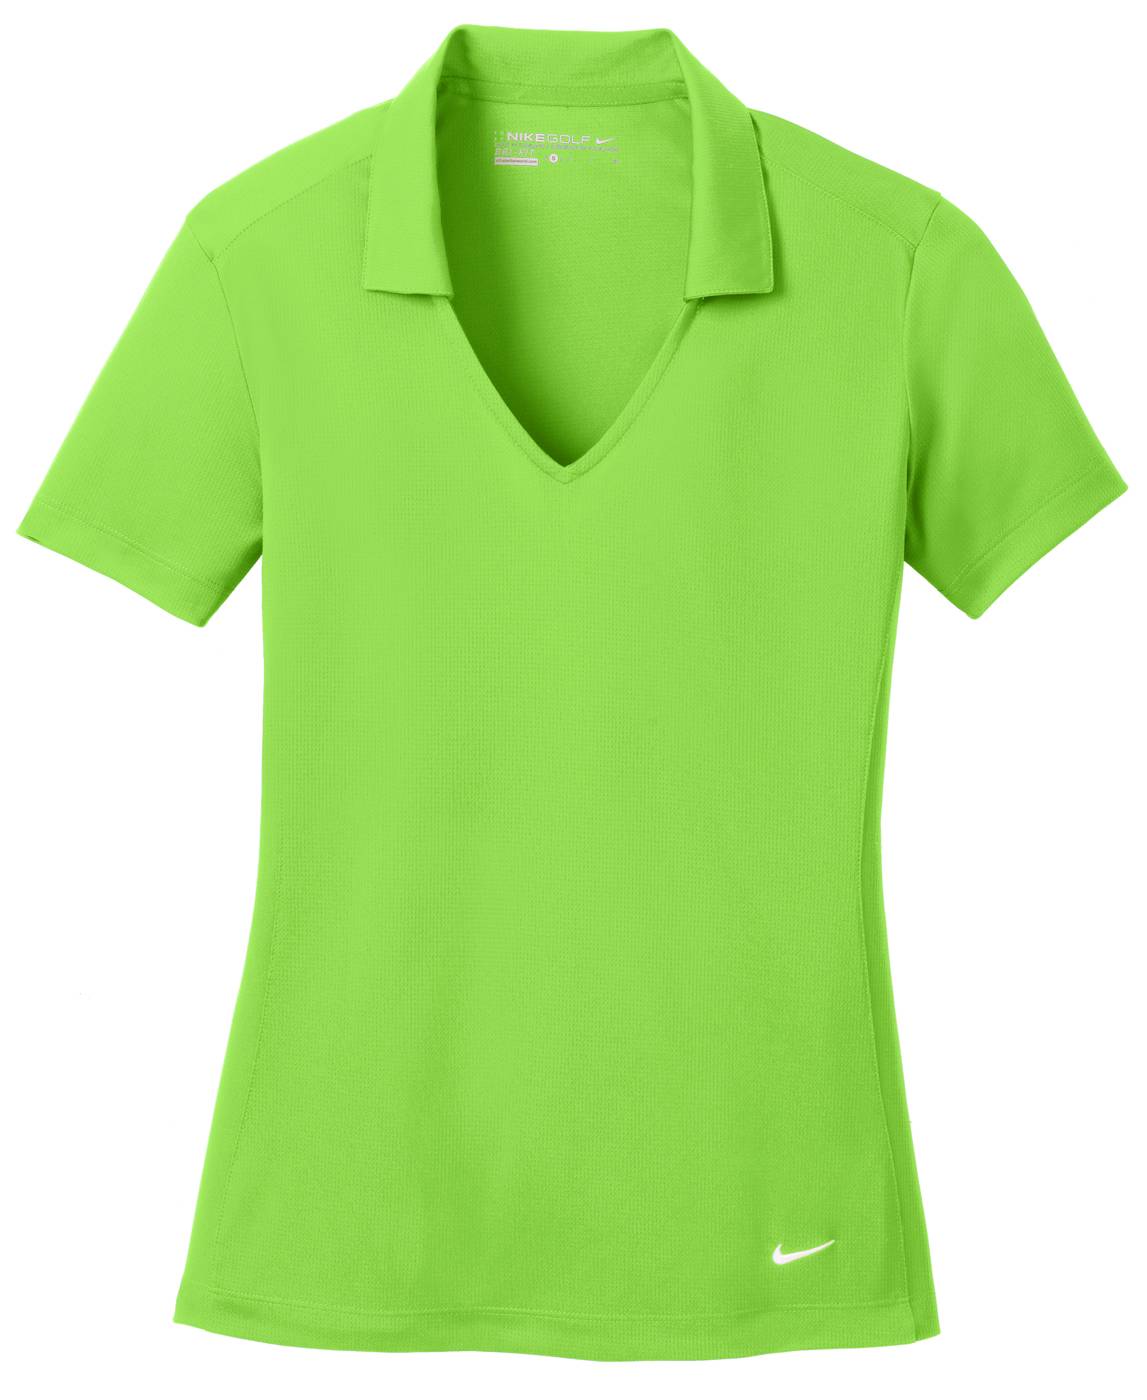 Nike Golf Shirt Size Chart